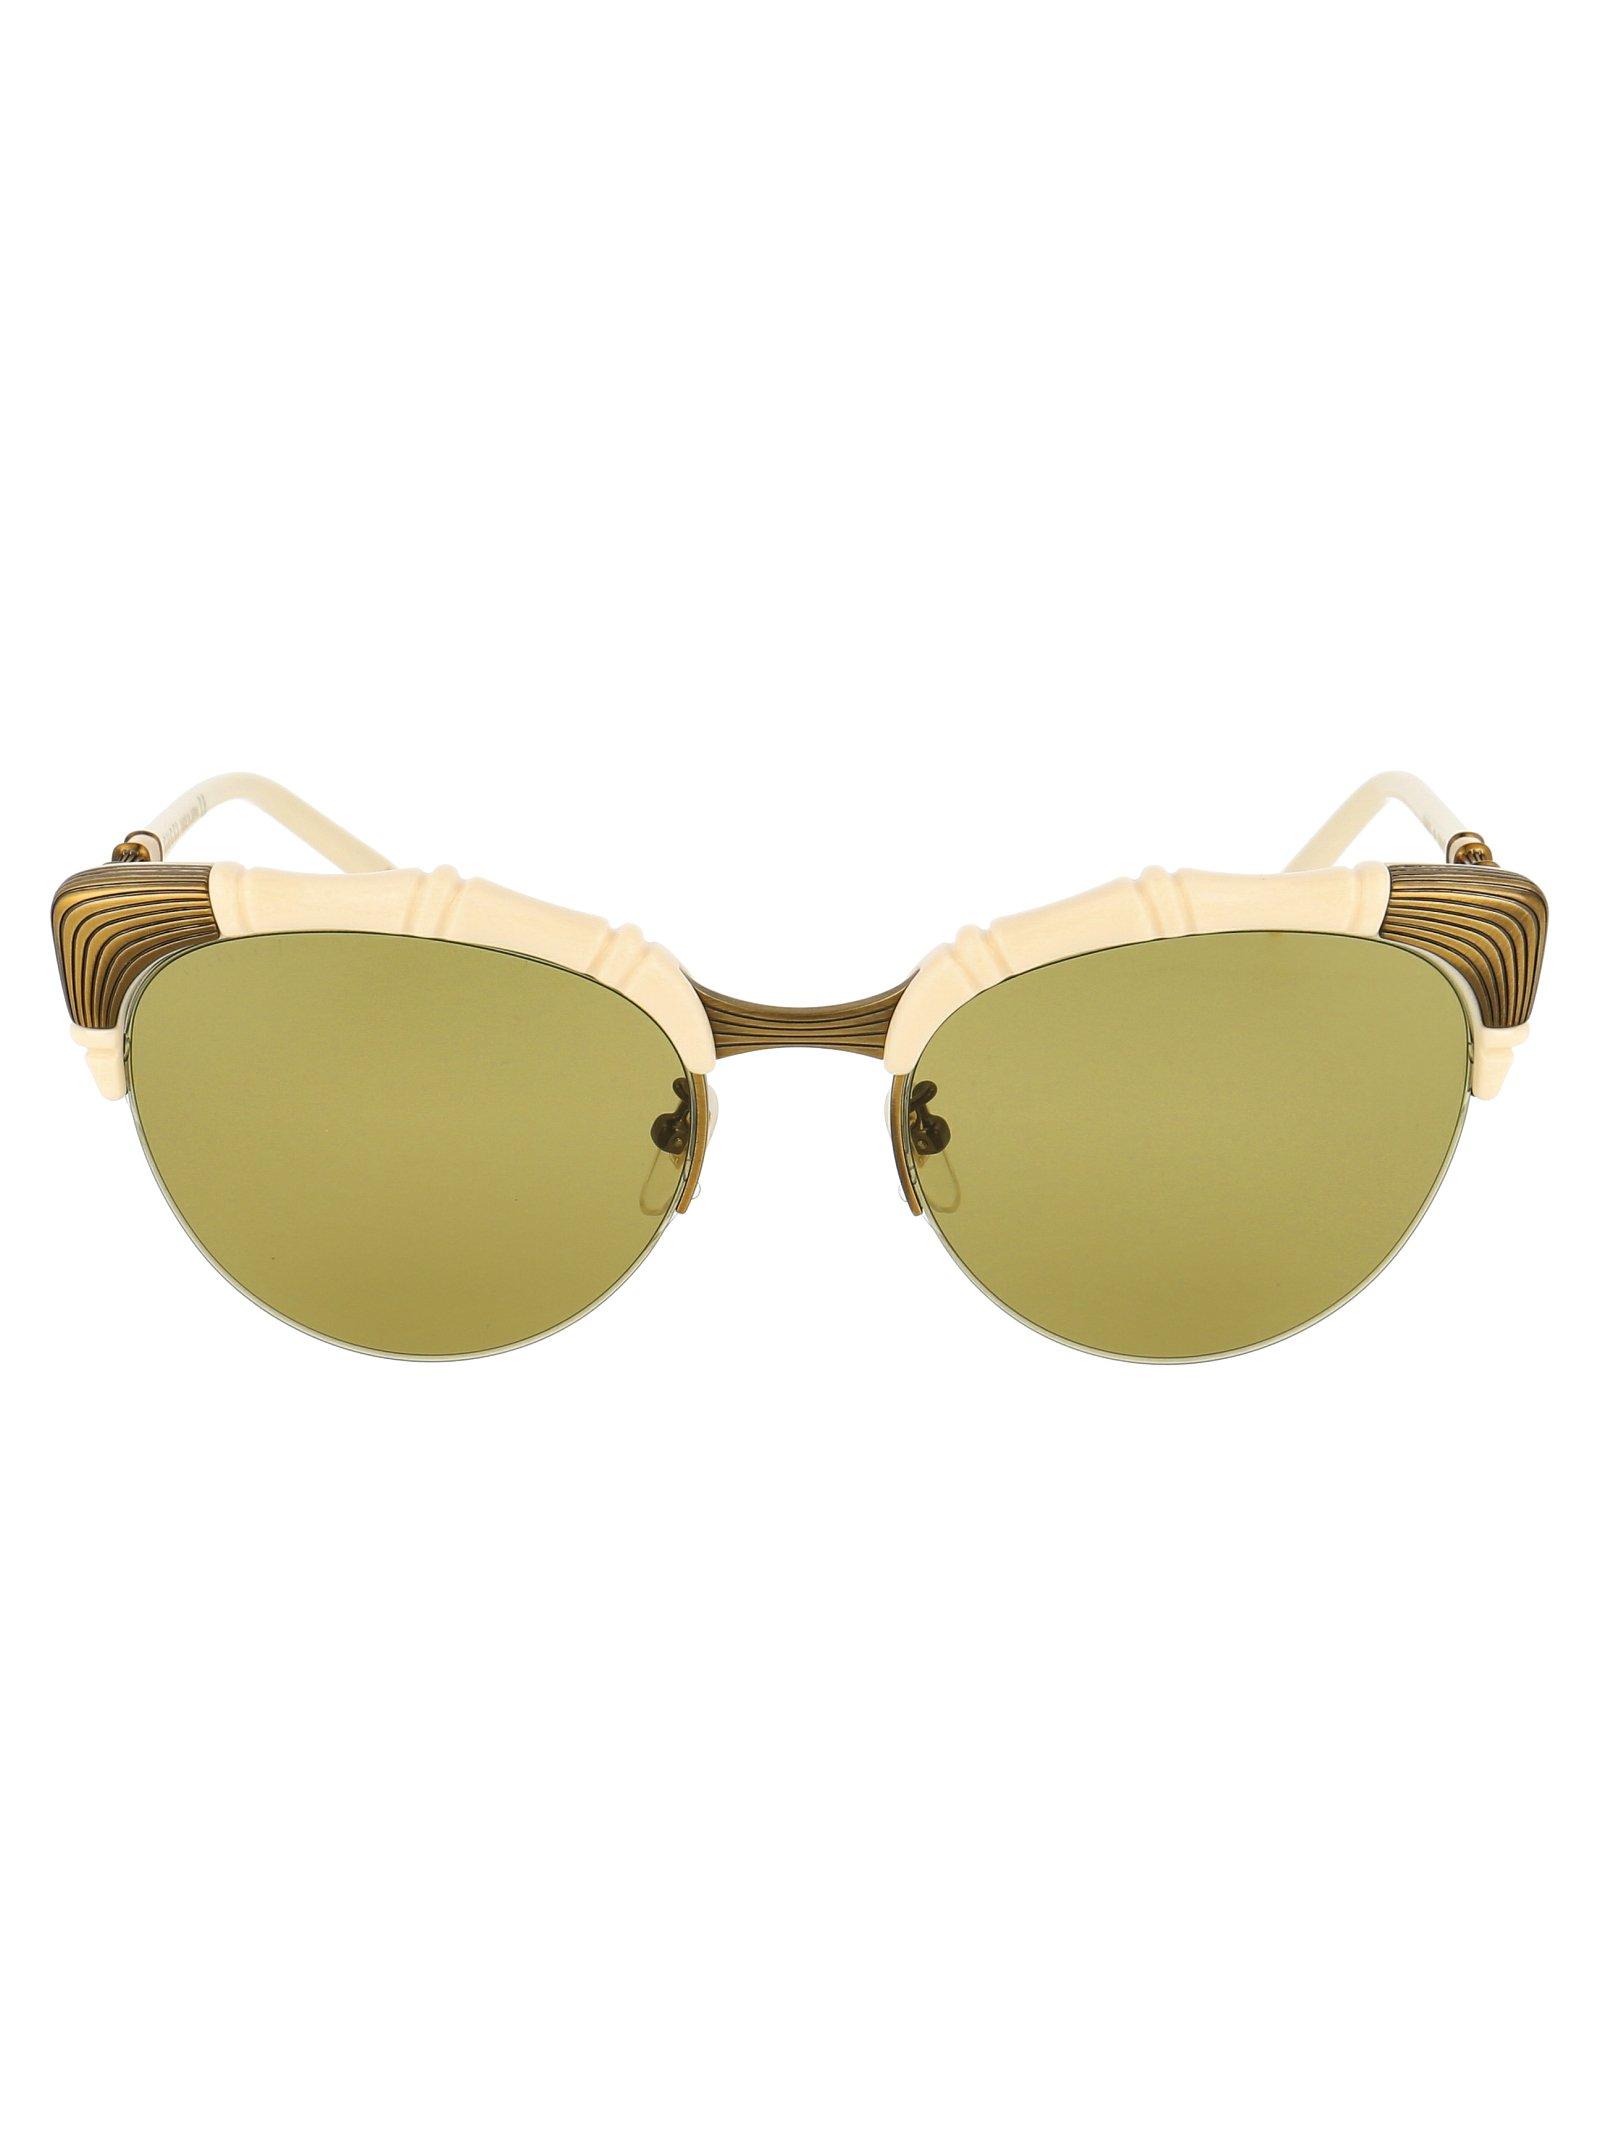 Gucci Bamboo Effect Cat Eye Sunglasses | Lyst